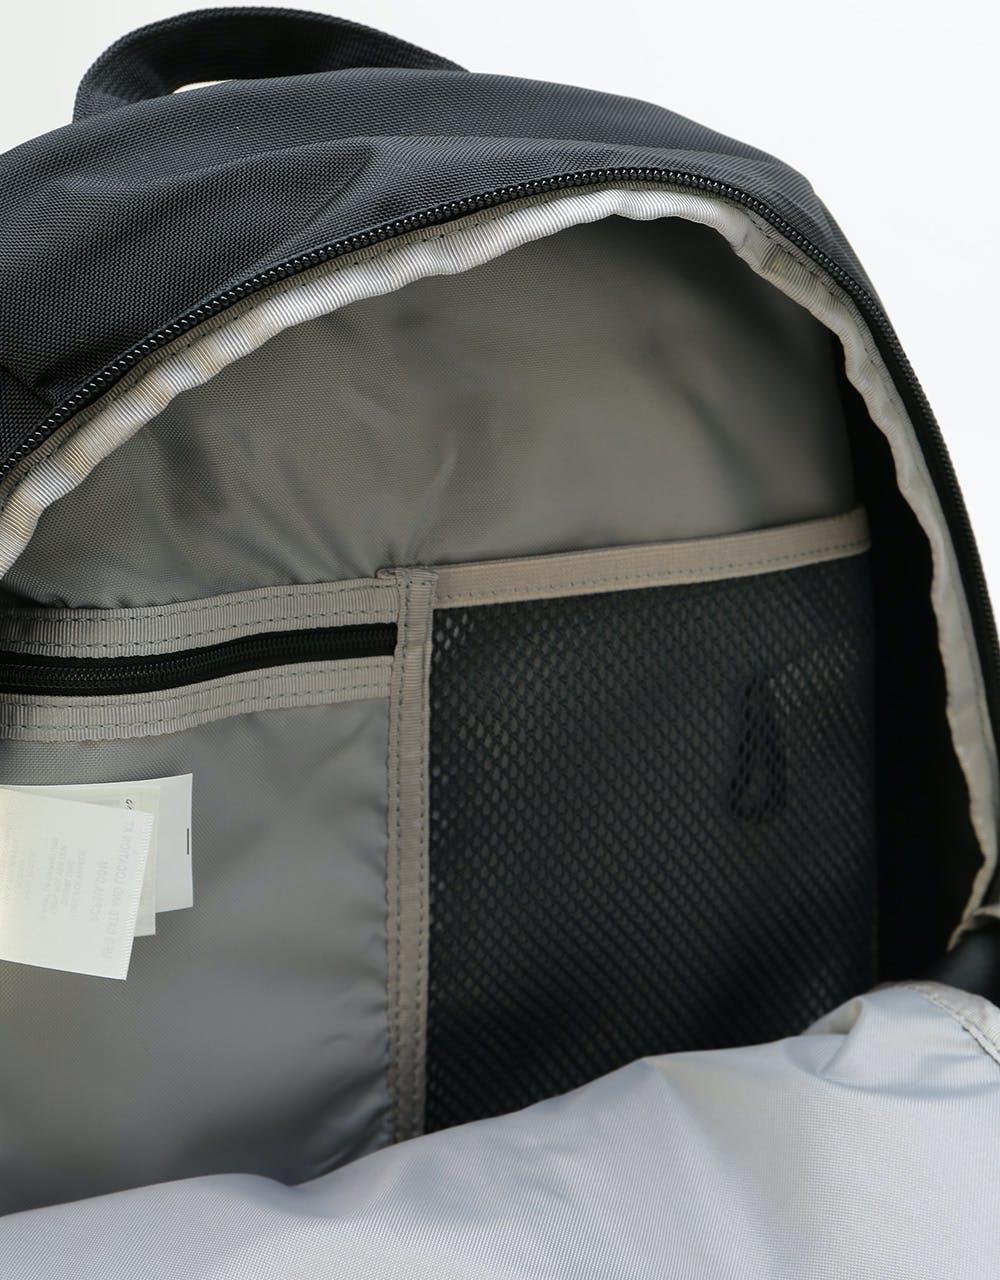 Patagonia Atom Pack 18L Backpack - Black